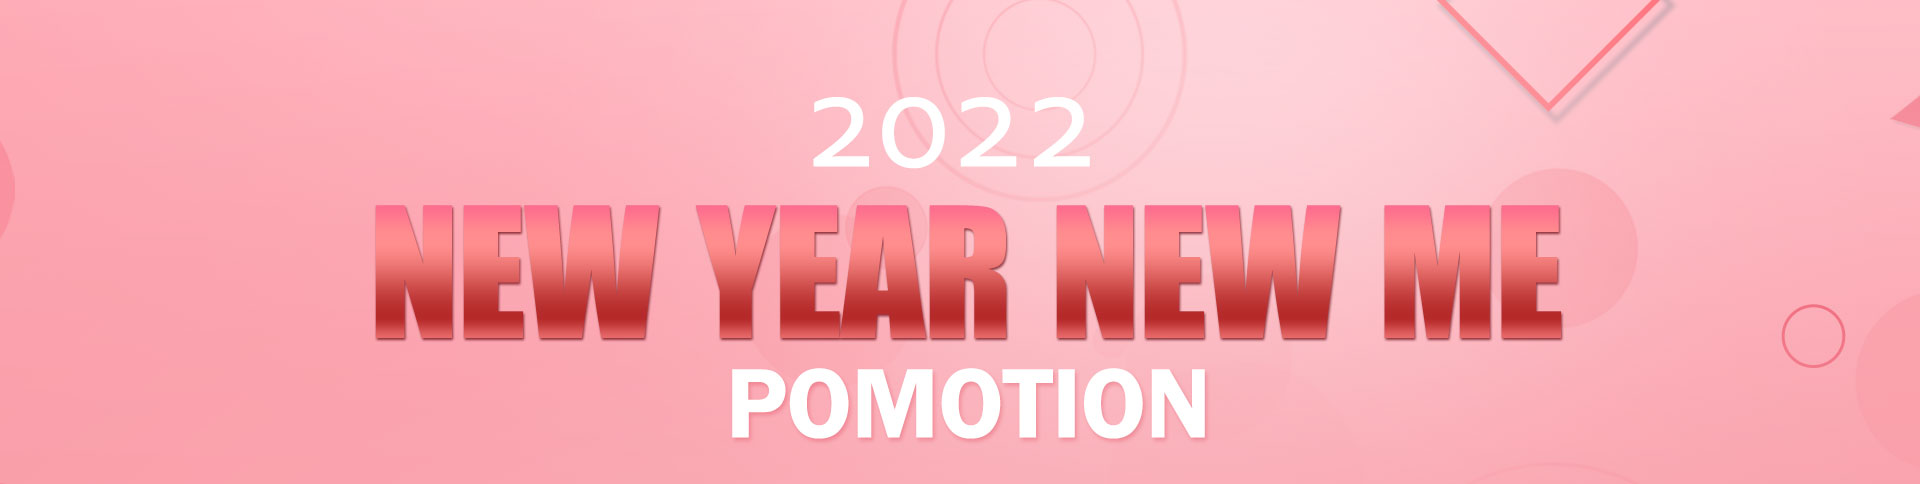 2022 Happy New Year with EVA